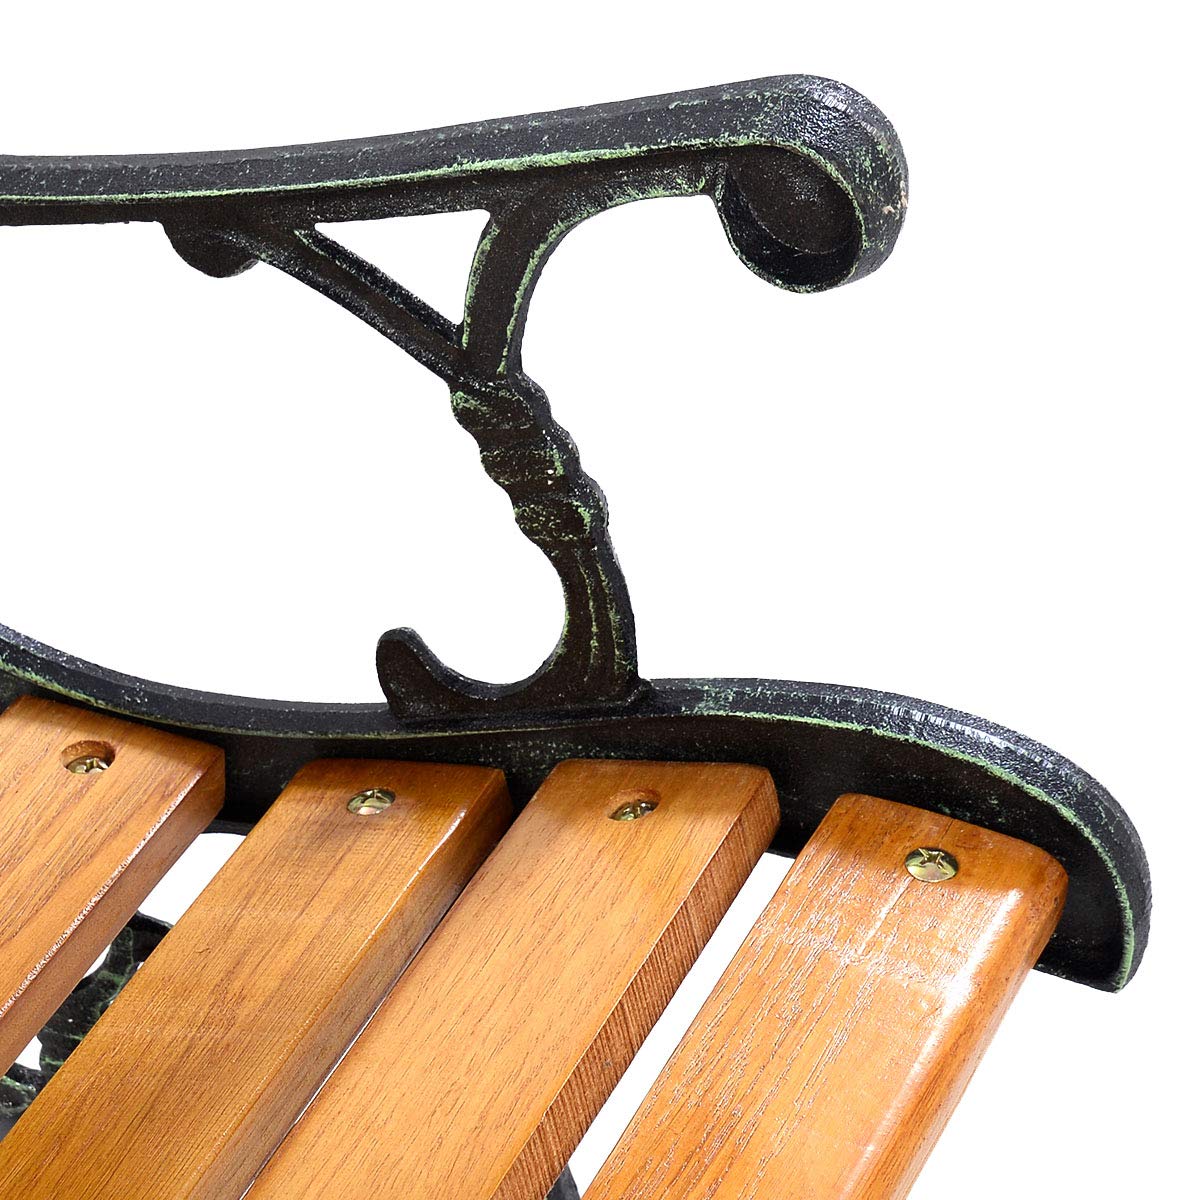 Giantex 50'' Patio Park Garden Bench, Weather Proof Porch Path Chair